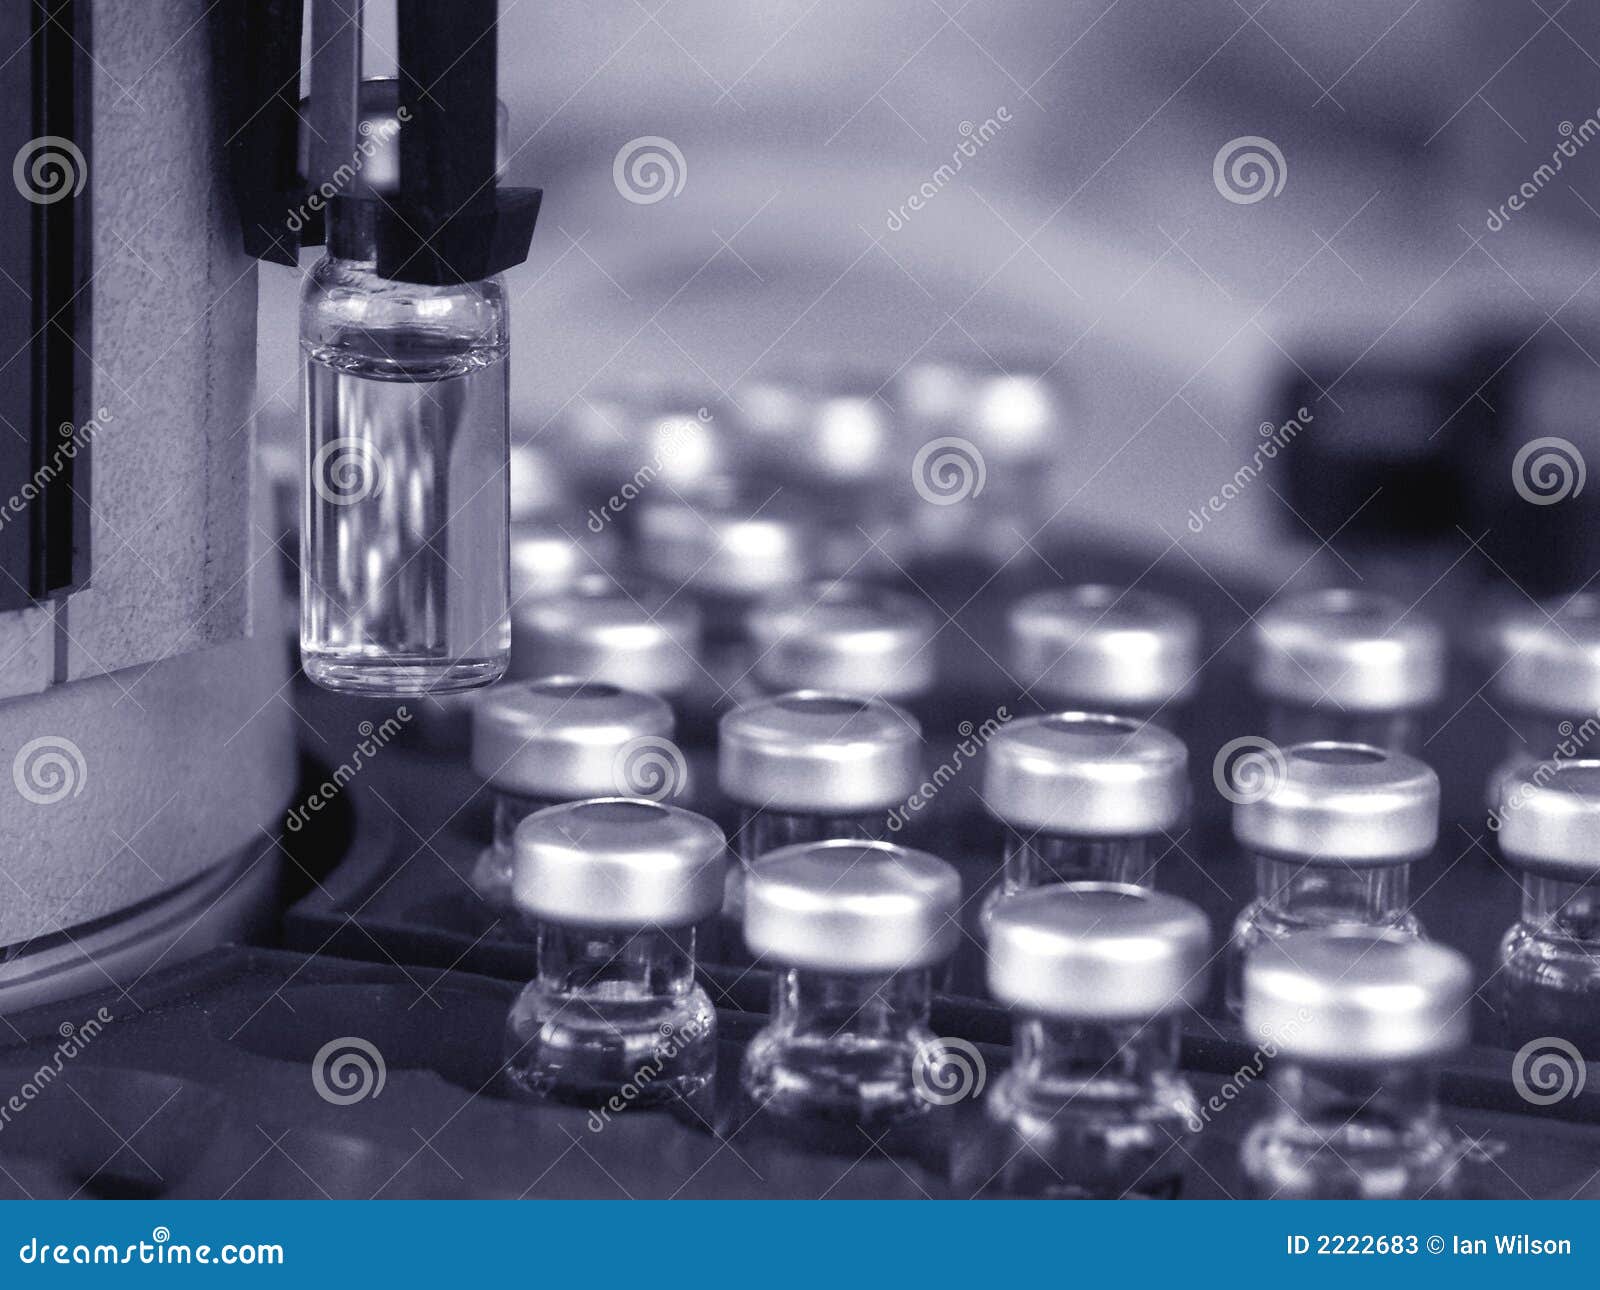 autosampler vials for analysis